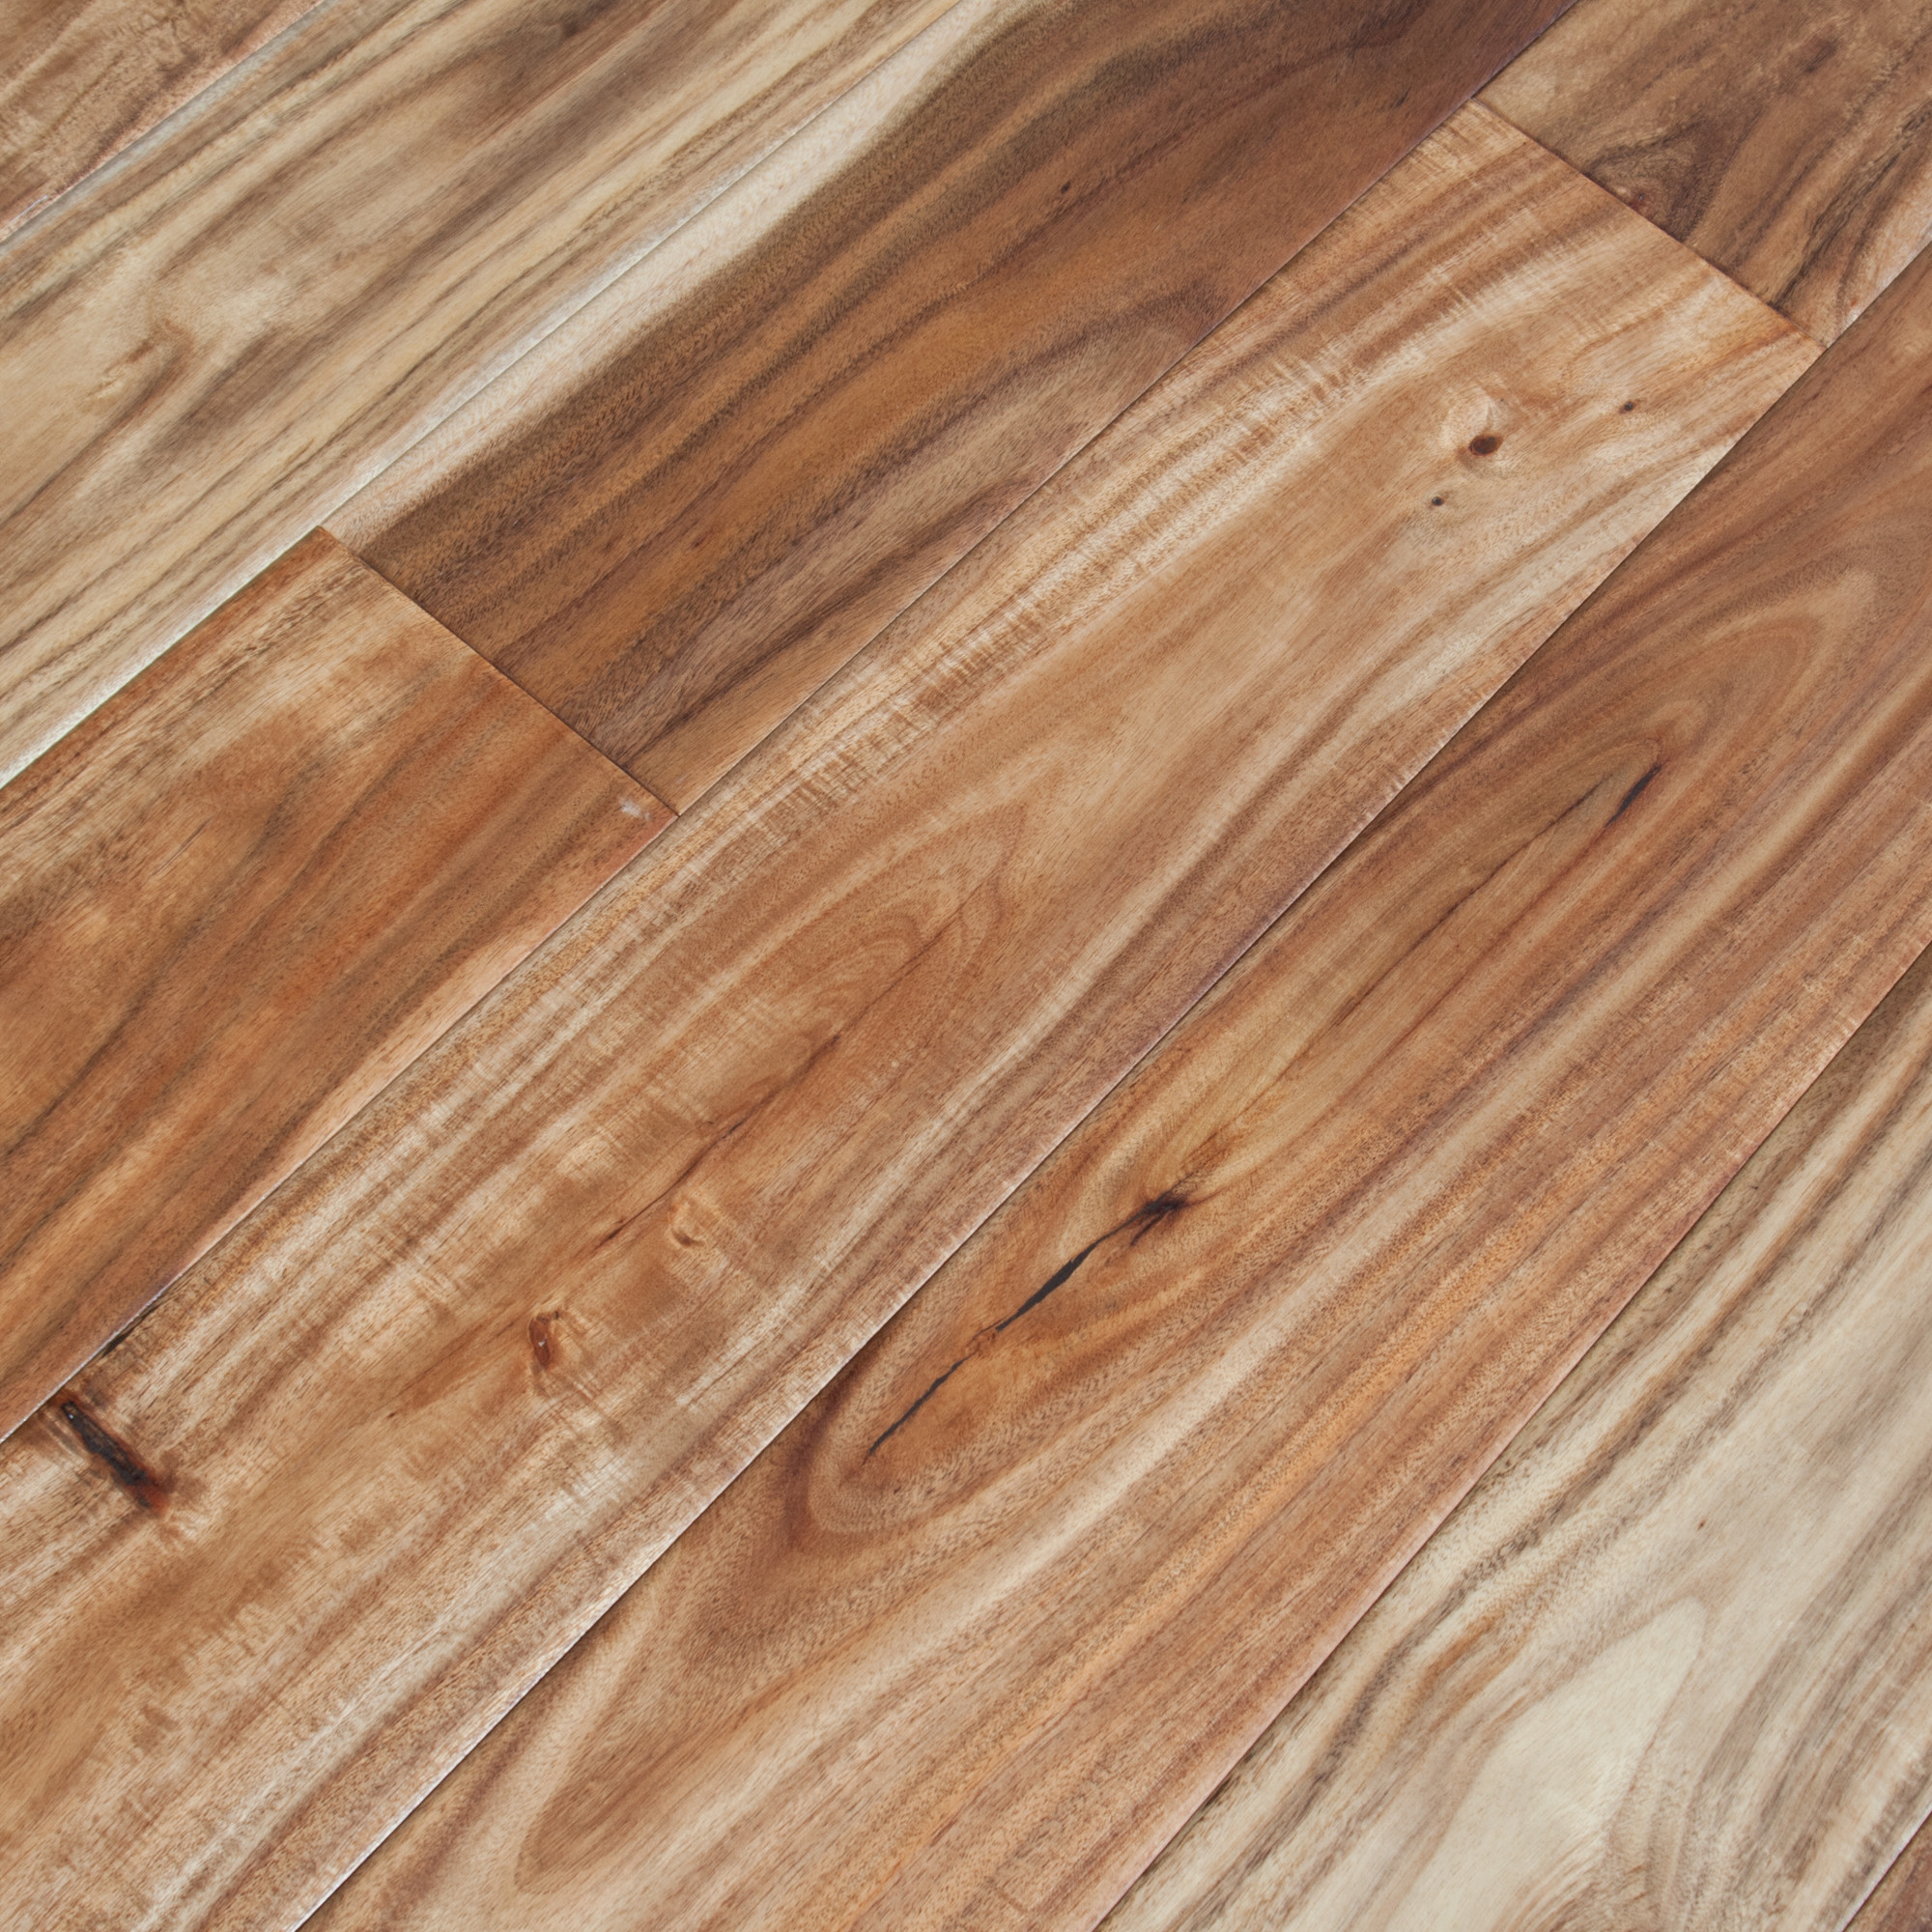 average cost to install engineered hardwood flooring of 9 mile creek acacia hand scraped acacia confusa wood floors intended for acacia handscraped natural hardwood flooring